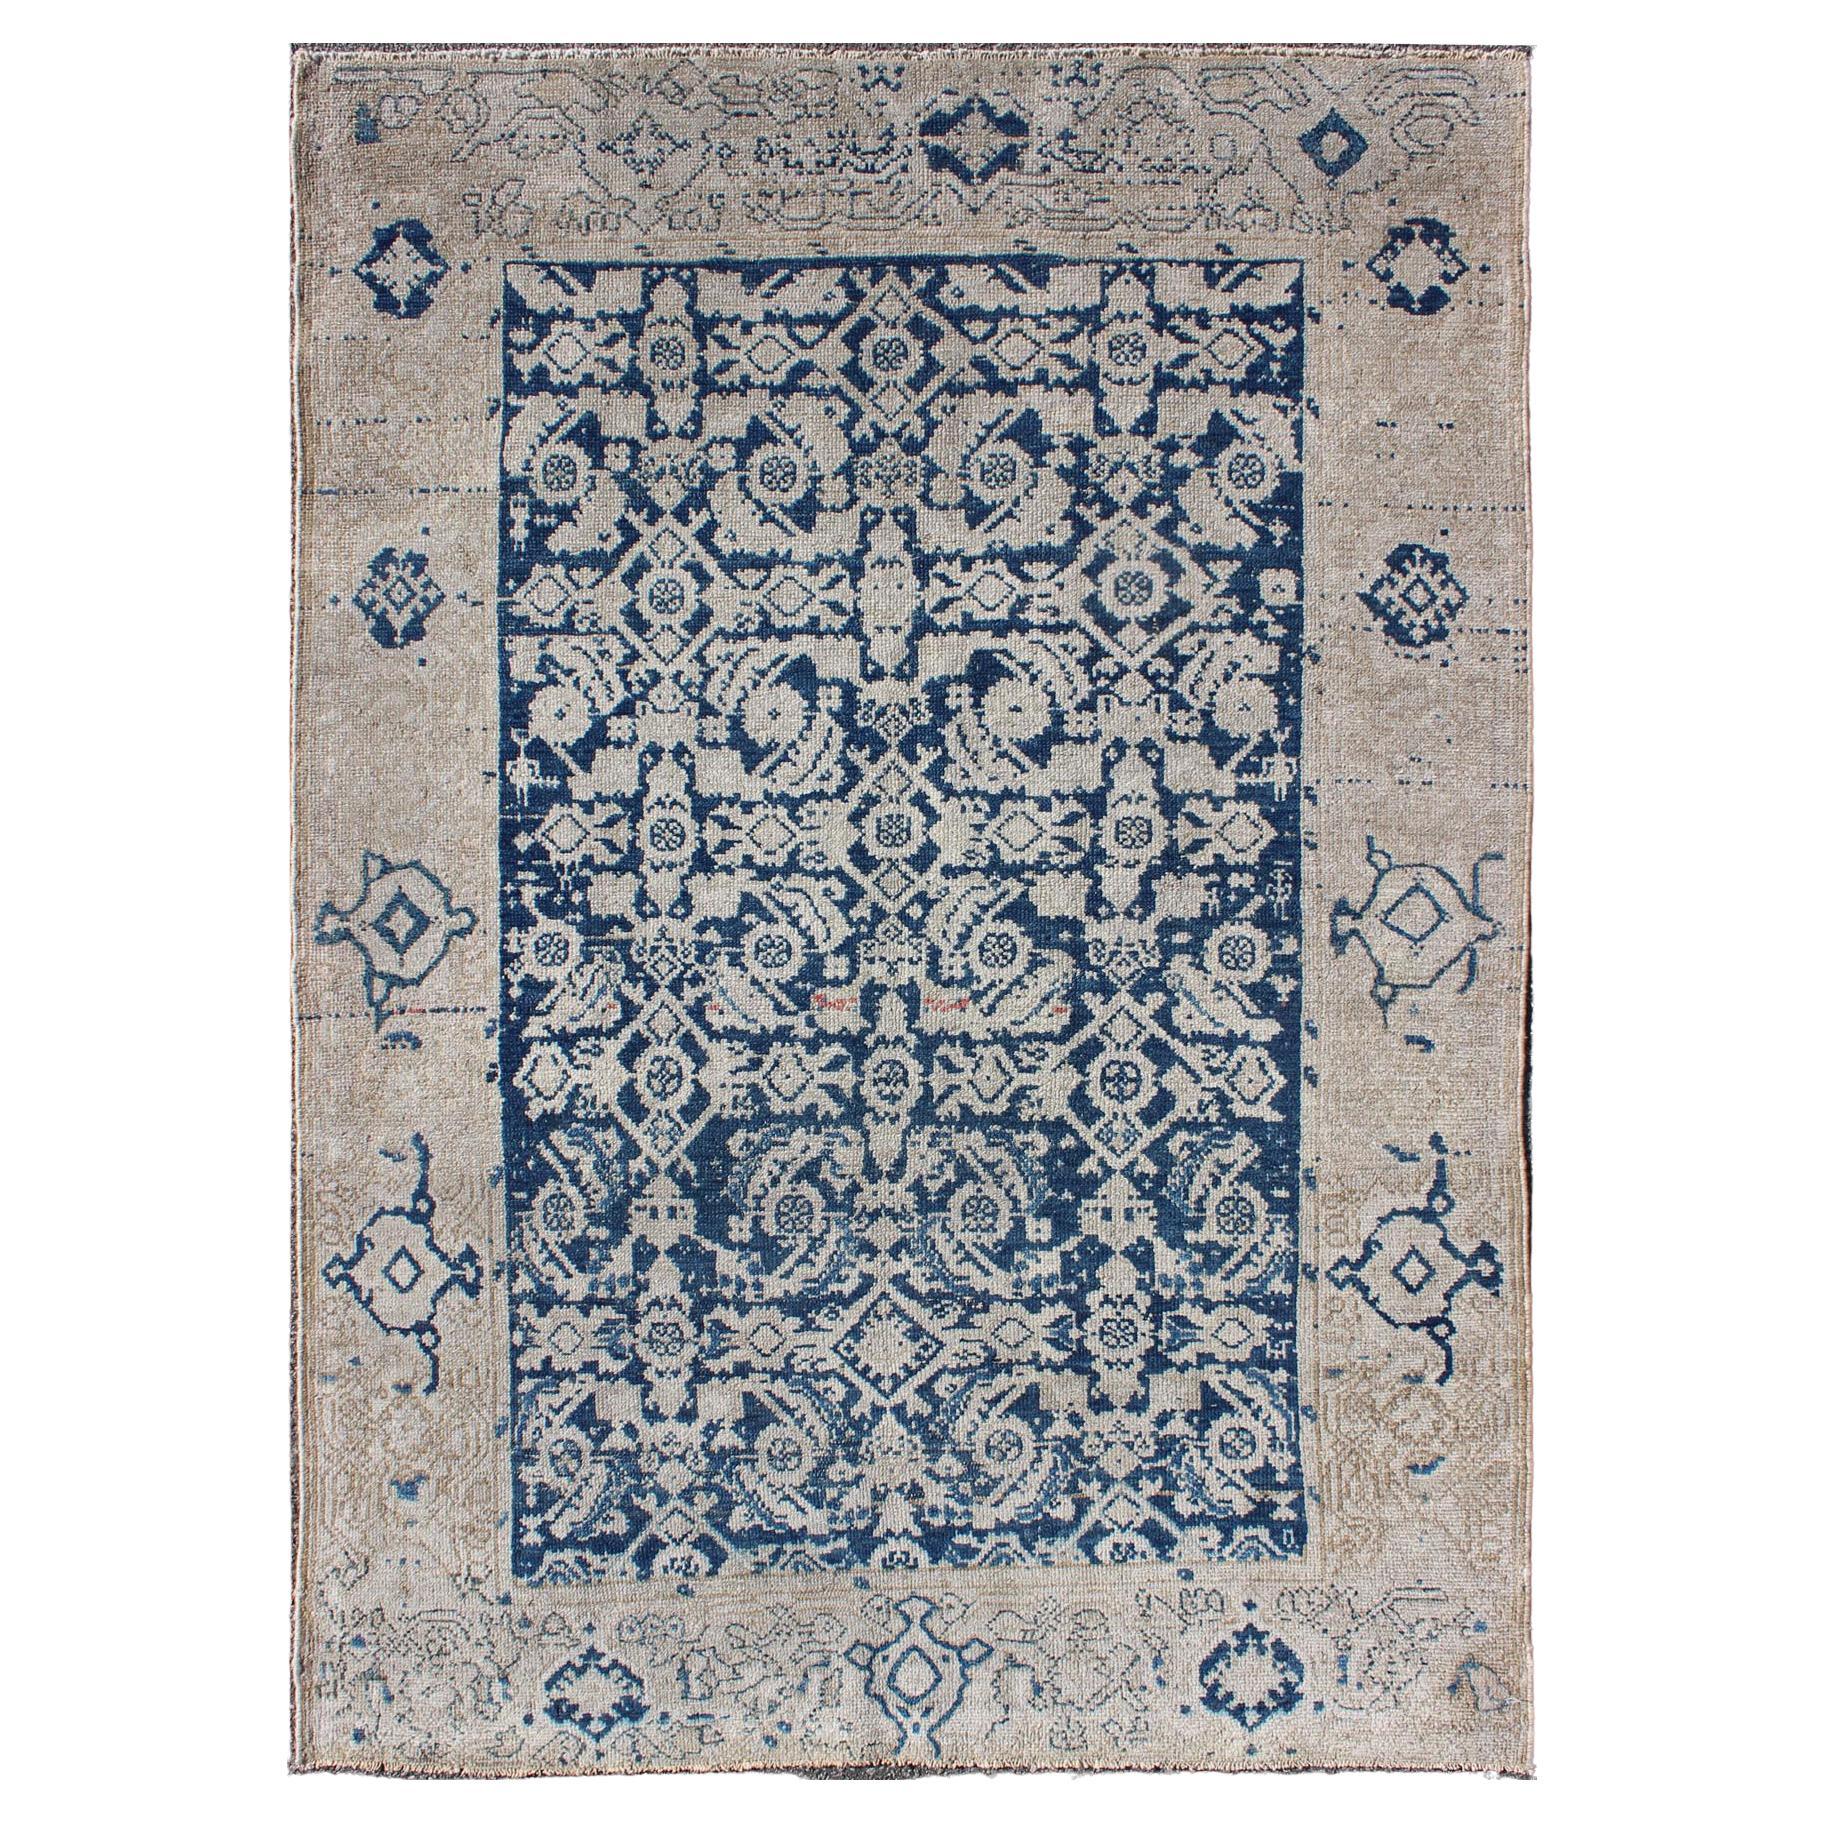  Ancien tapis persan Malayer vieilli avec motif Herati sur toute sa surface en bleu marine